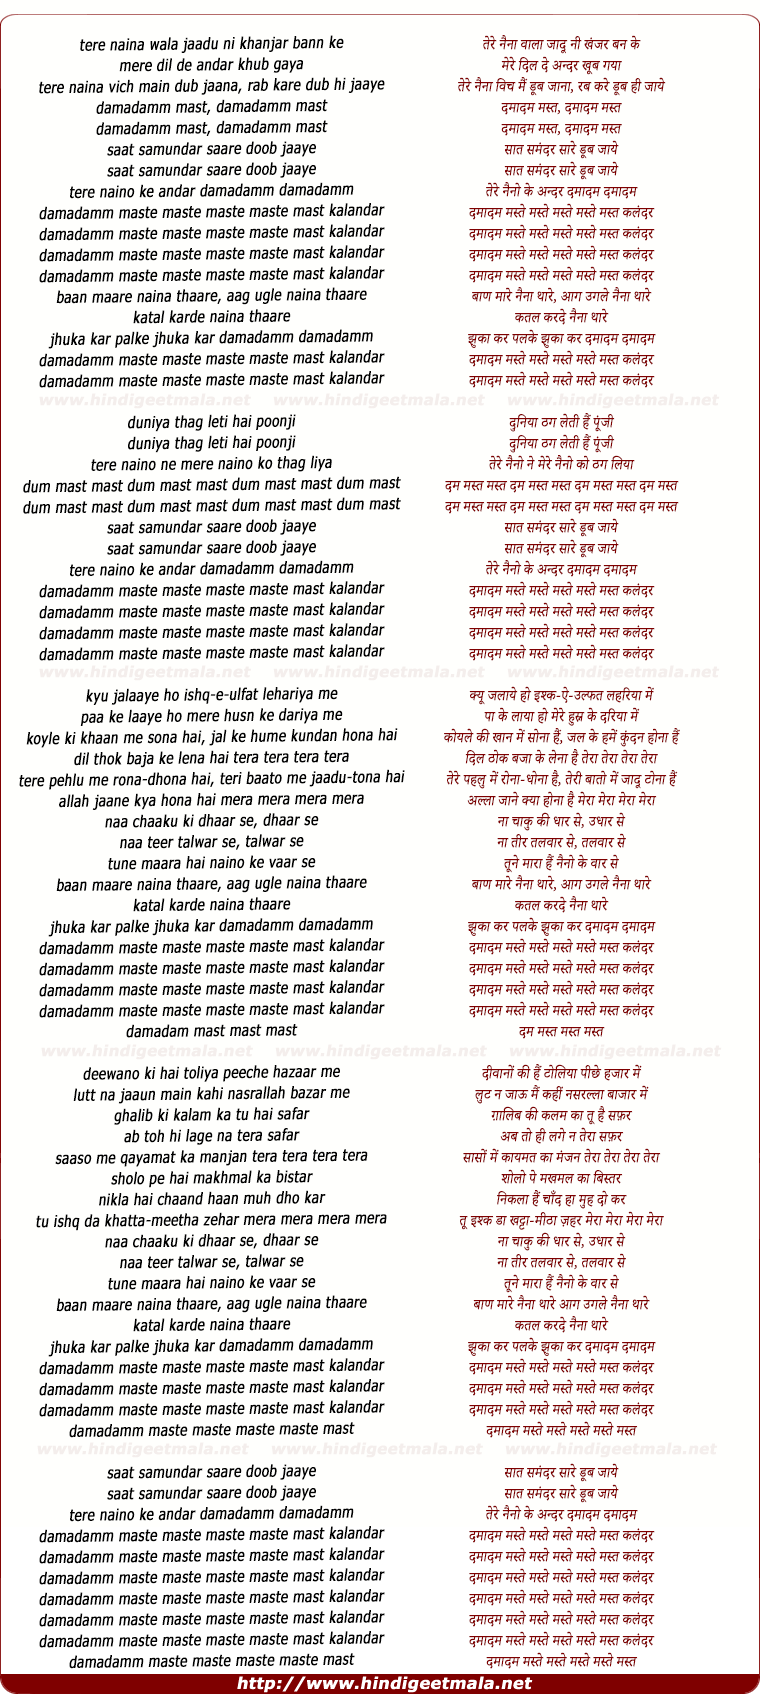 lyrics of song Damadamm Maste Maste Maste Maste Mast Kalandar